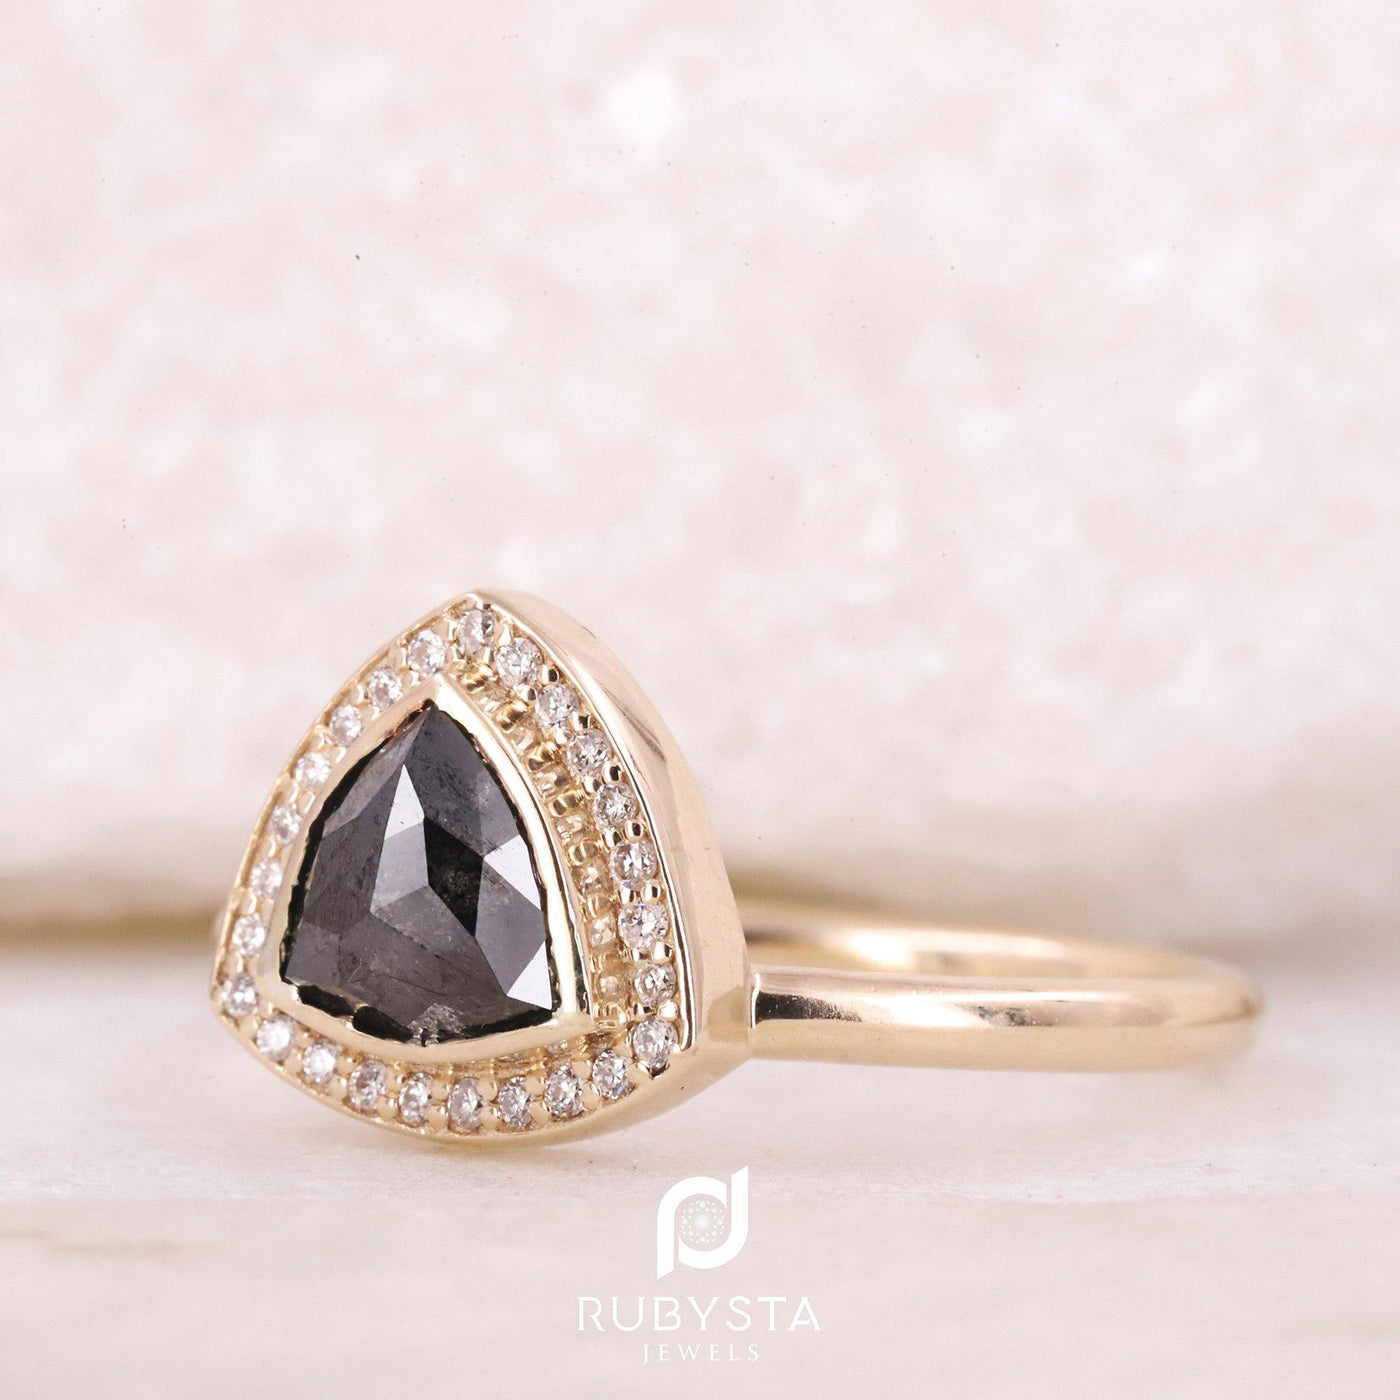 Salt and Pepper Trillion Diamond Ring | Engagement Ring | Trillion Diamond Ring - Rubysta